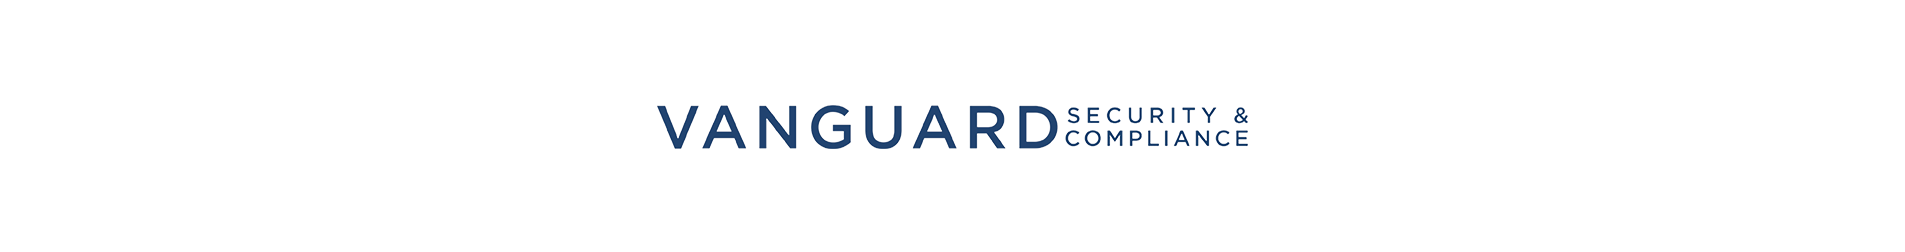 Vanguard Integrity Professionals's profile banner